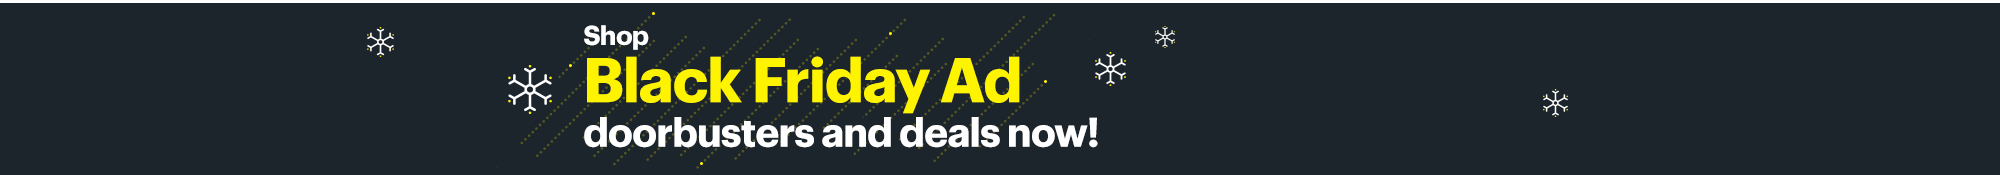 best buy black friday 2018 ads